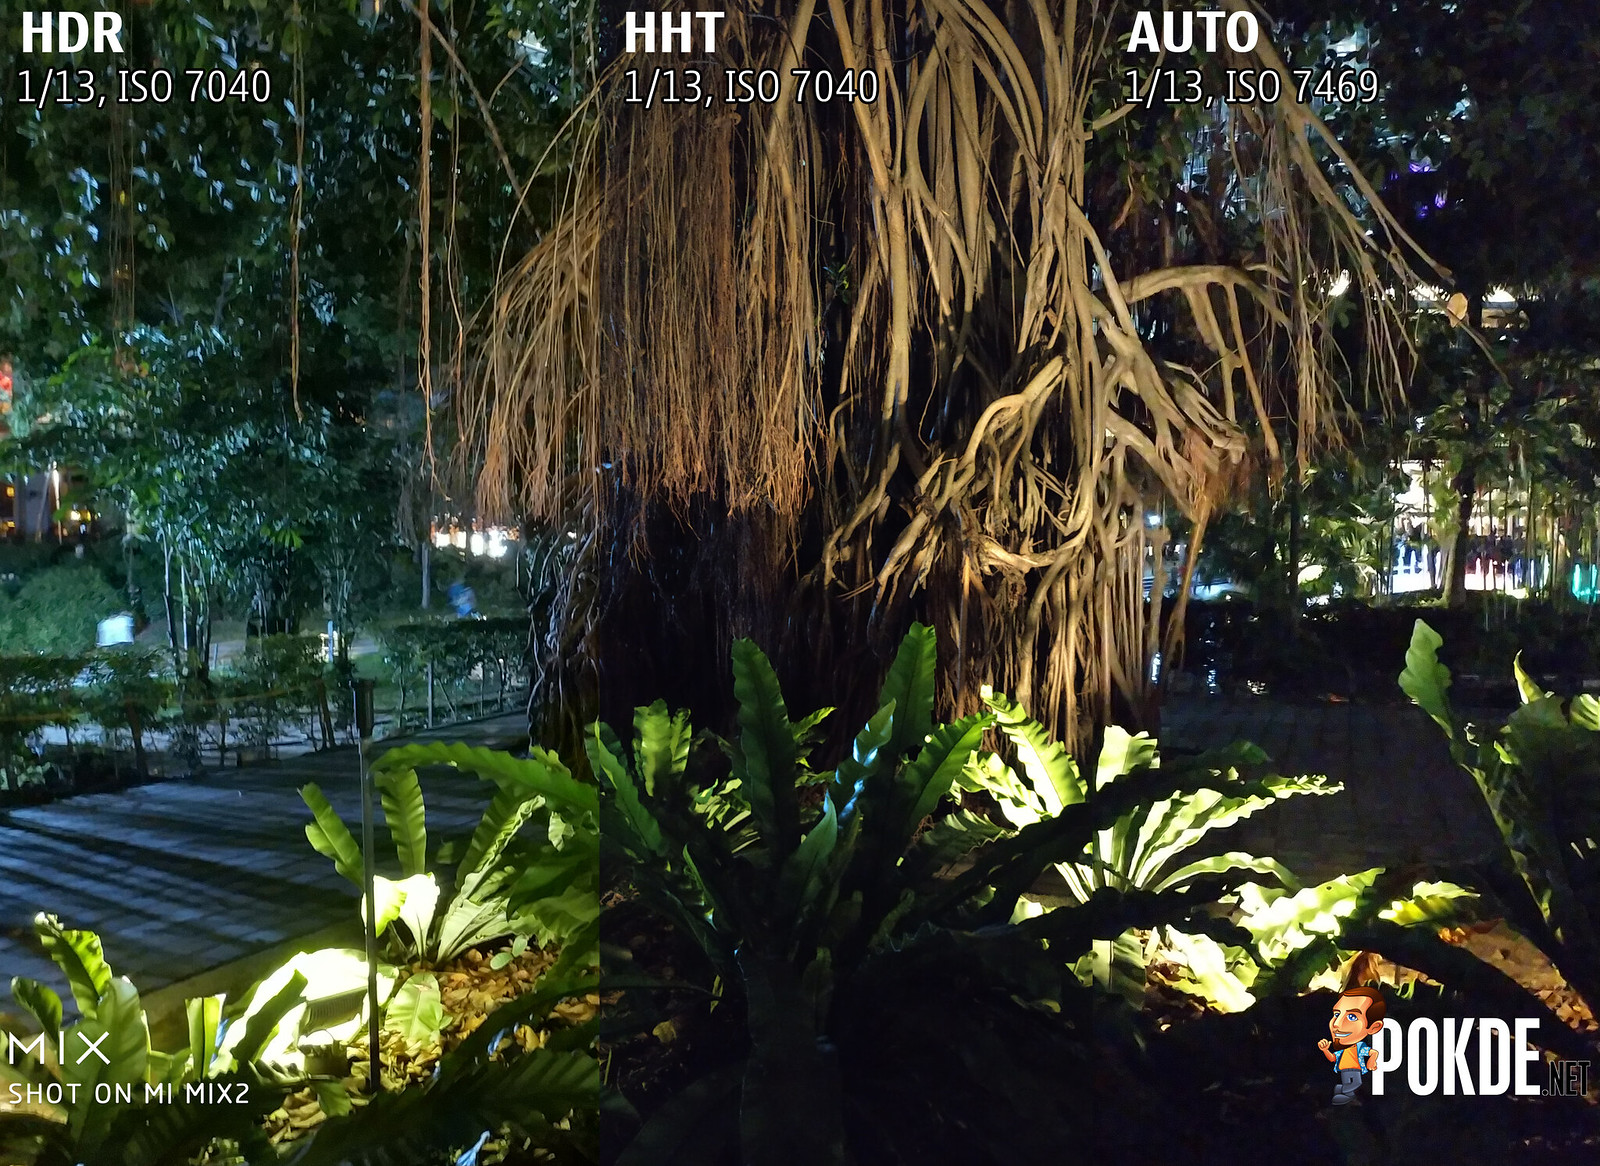 Xiaomi Mi MIX 2 HDR vs HHT vs Auto